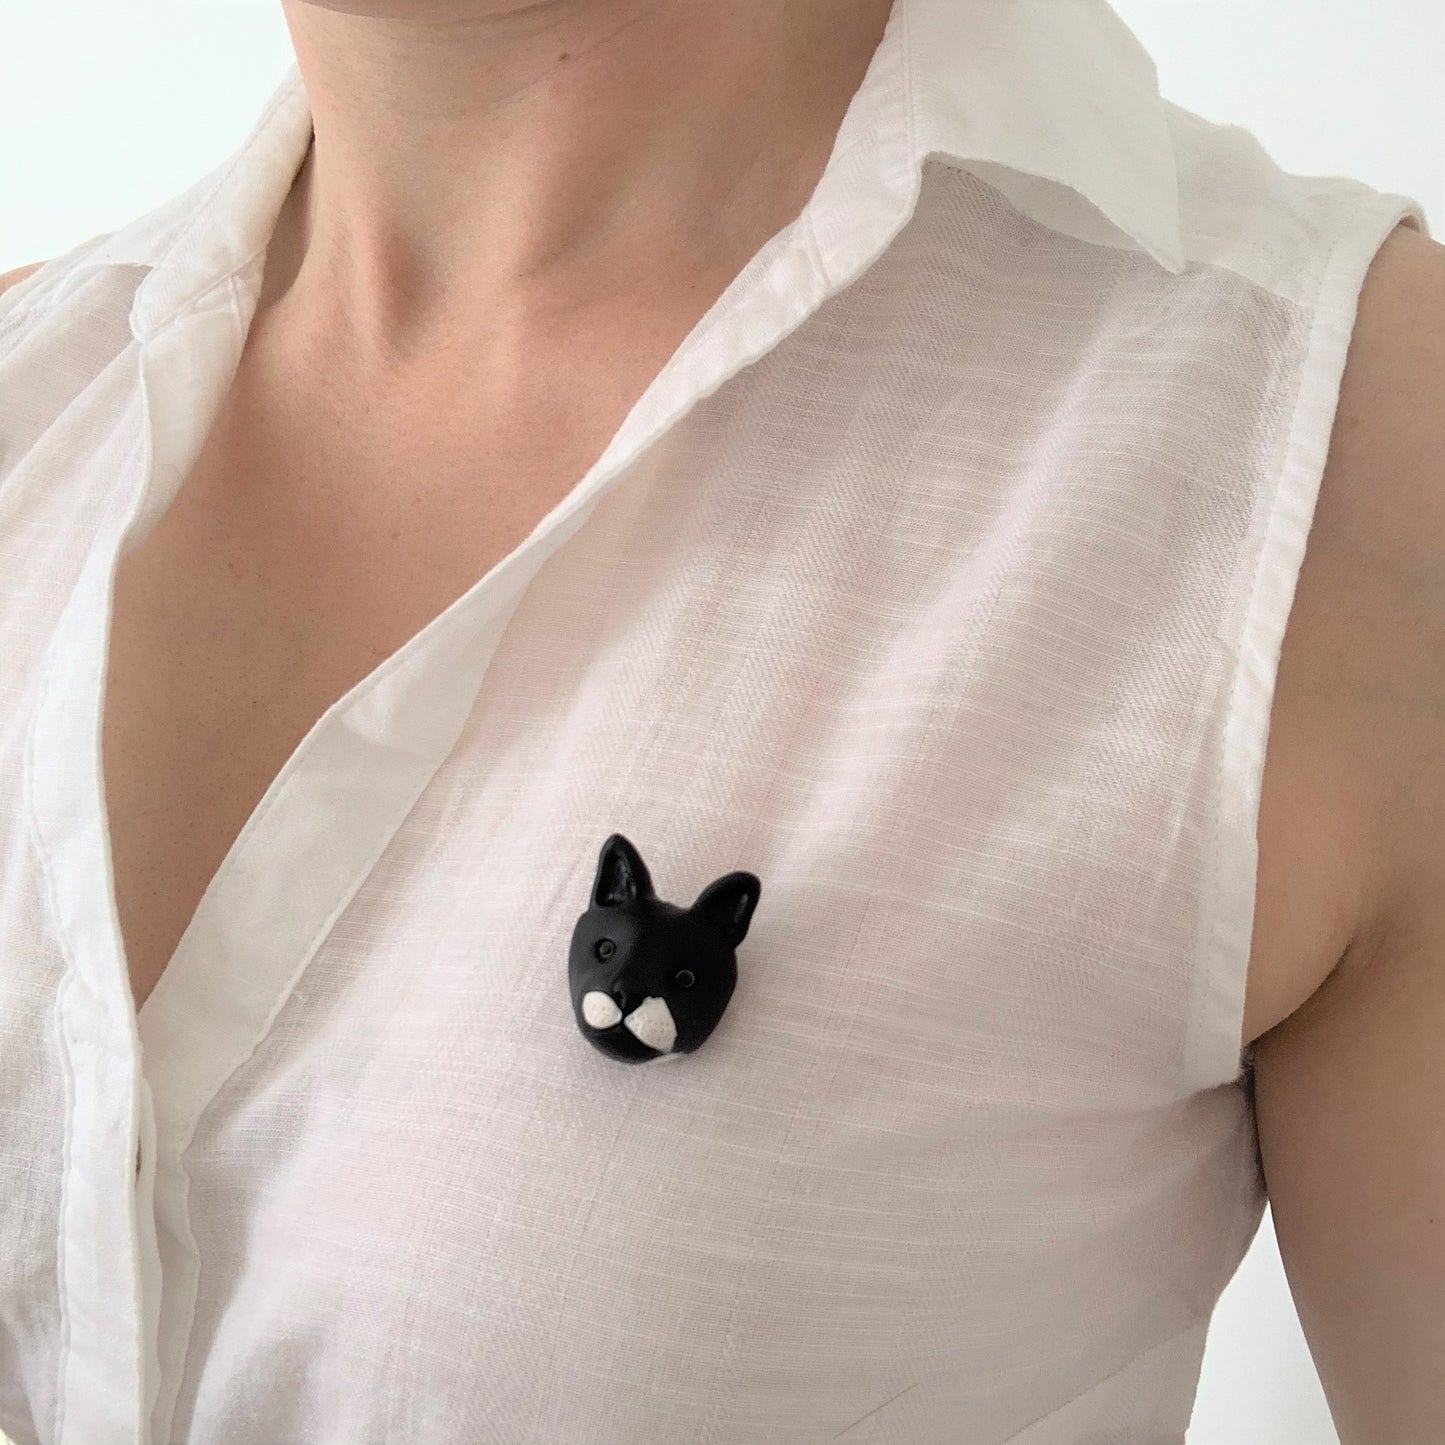 Handmade polymer clay black cat brooch, shown on white shirt.